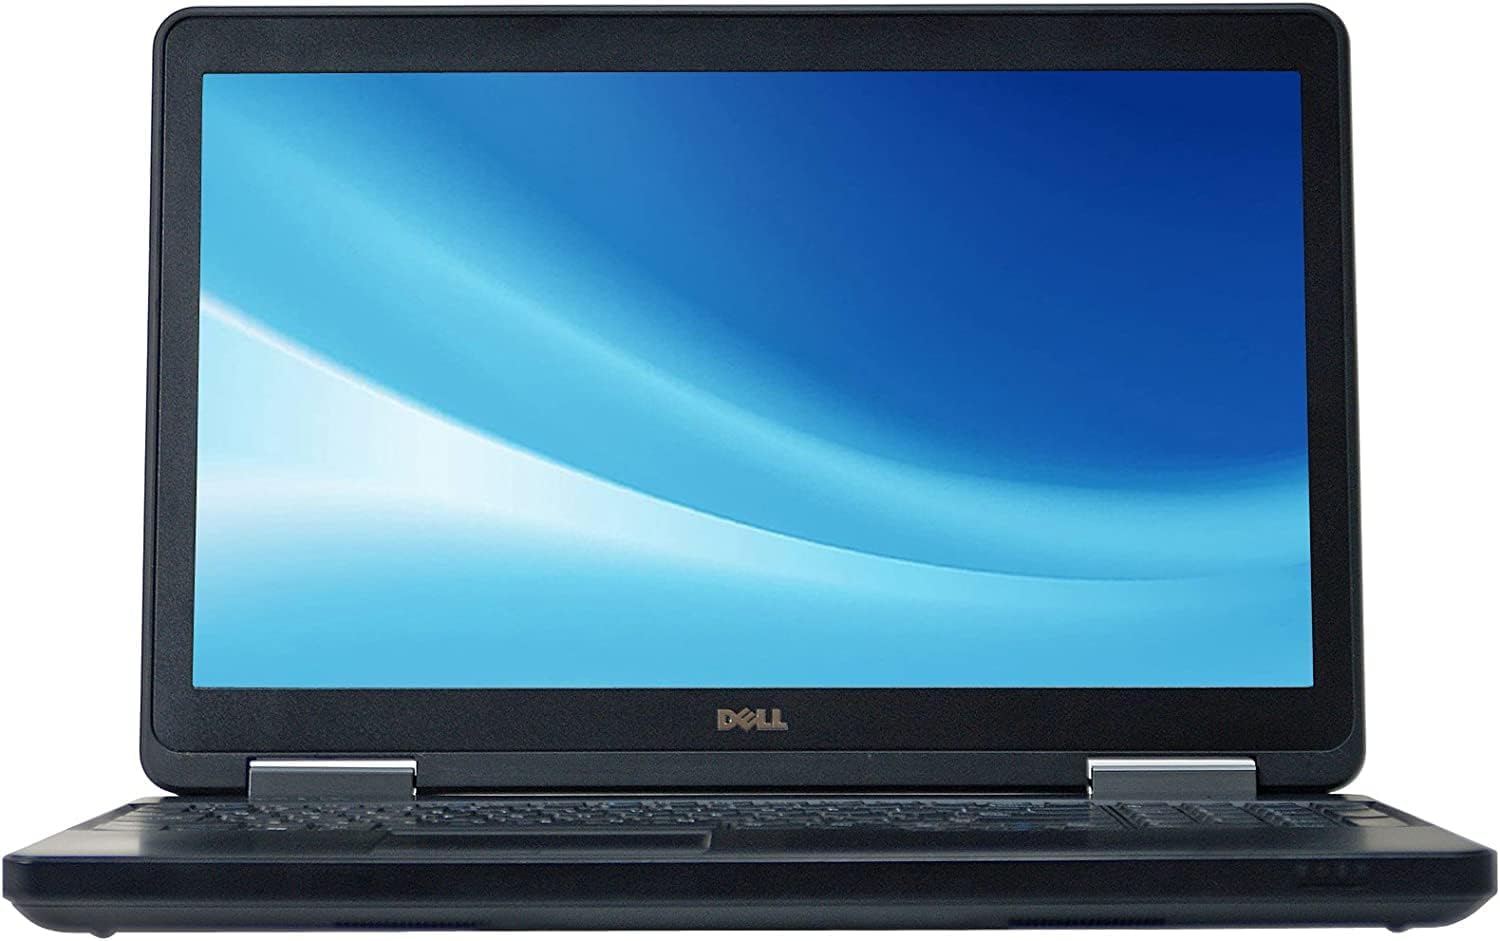 Refurbished Dell Latitude E5540 Laptop Computer, Intel Core i5, 8GB Ram, 128GB Solid State Drive, Windows 10 Operating System